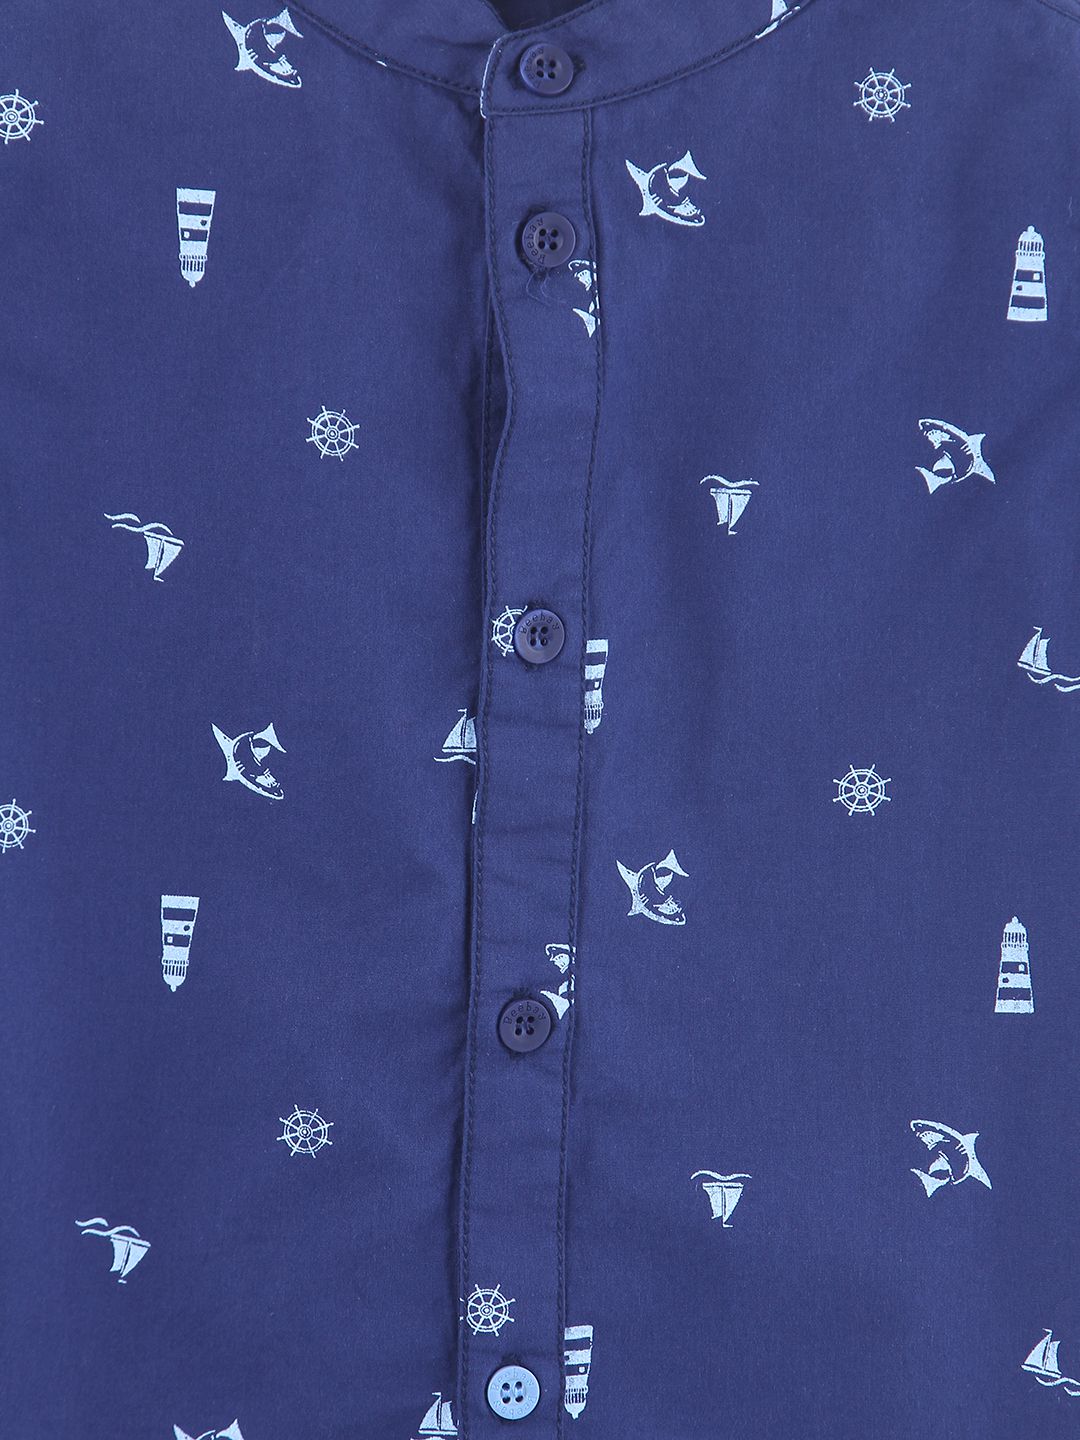 Mandarin Collar Nautical Print Shirt Navy 3-6M - Buy Mandarin Collar ...